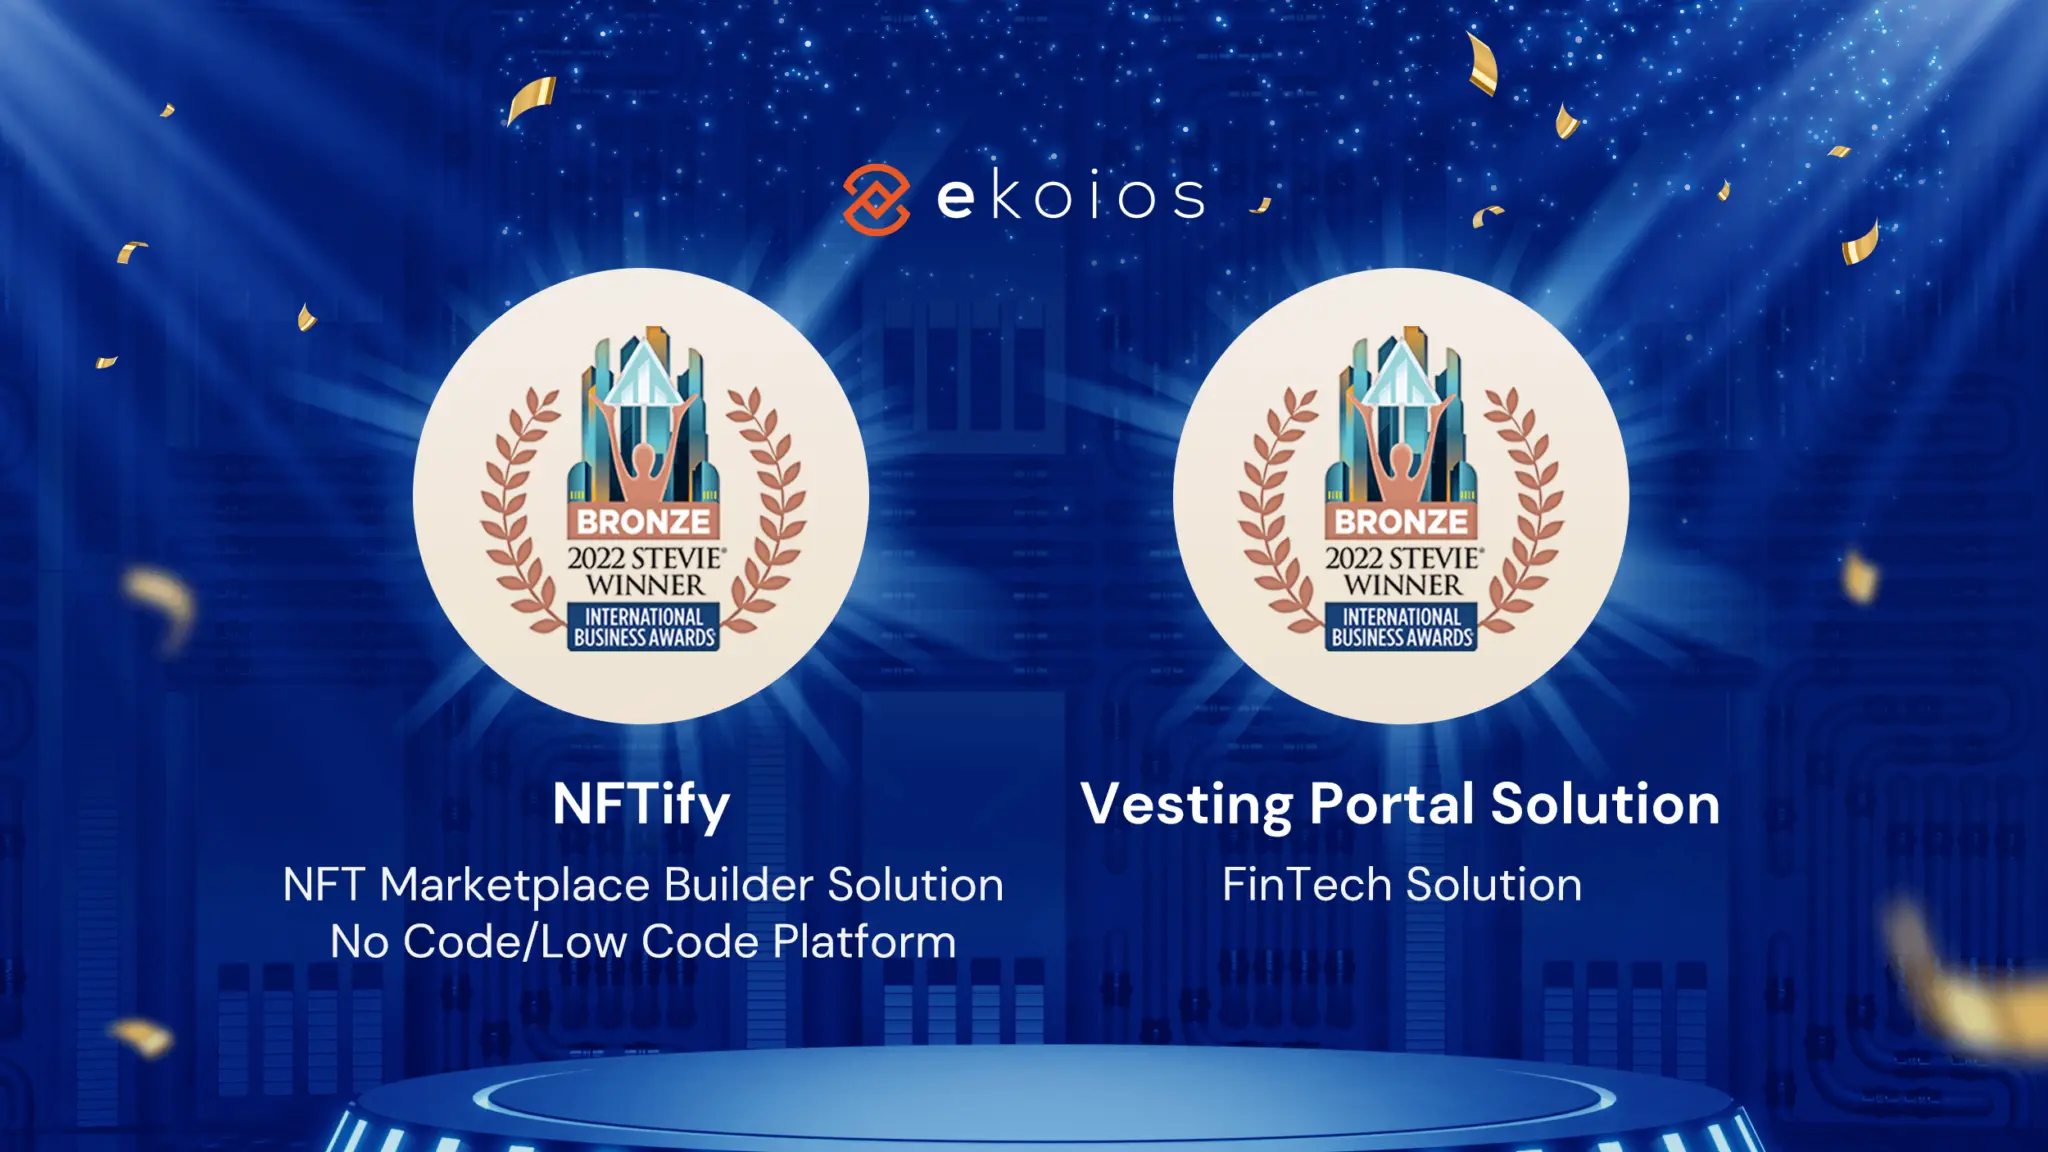 Ekoios Technology wins 2 bronzes at the 2022 International Business Awards®